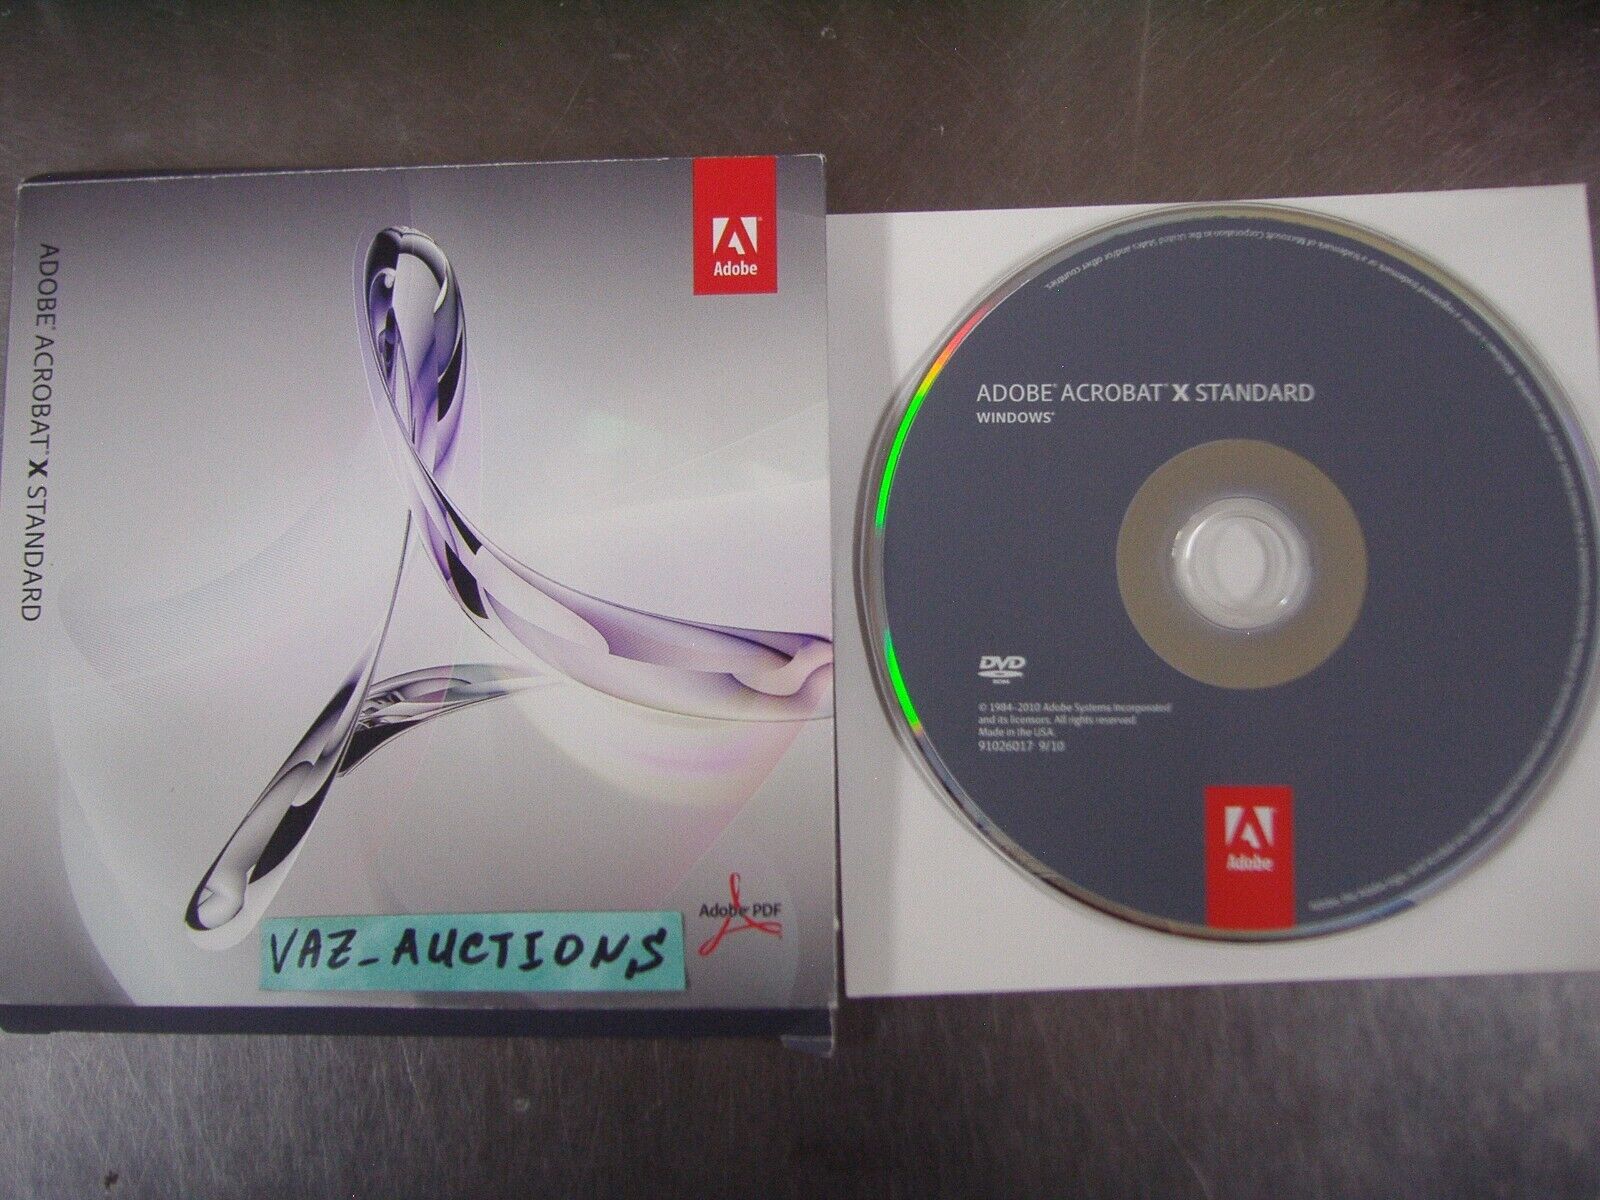 Adobe Acrobat X 10 Standard Full Windows Licensed for 2 PCs  =PERMANENT VERSION=